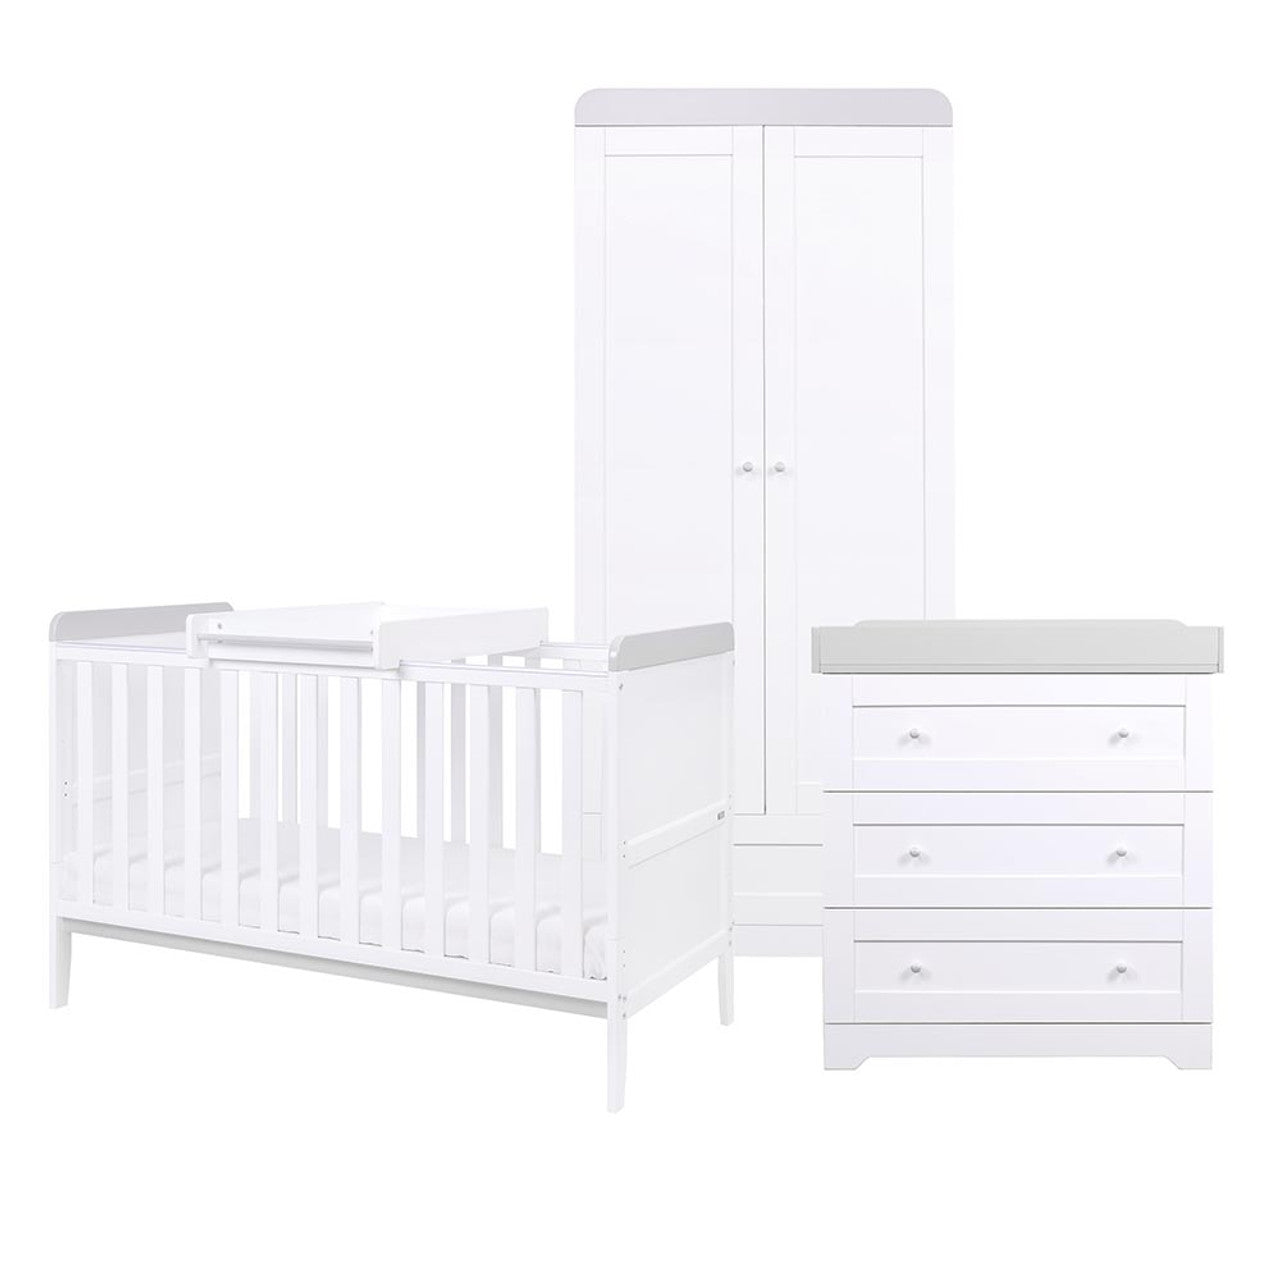 Tutti Bambini Rio 3 Piece Room Set - White / Dove Grey - For Your Little One